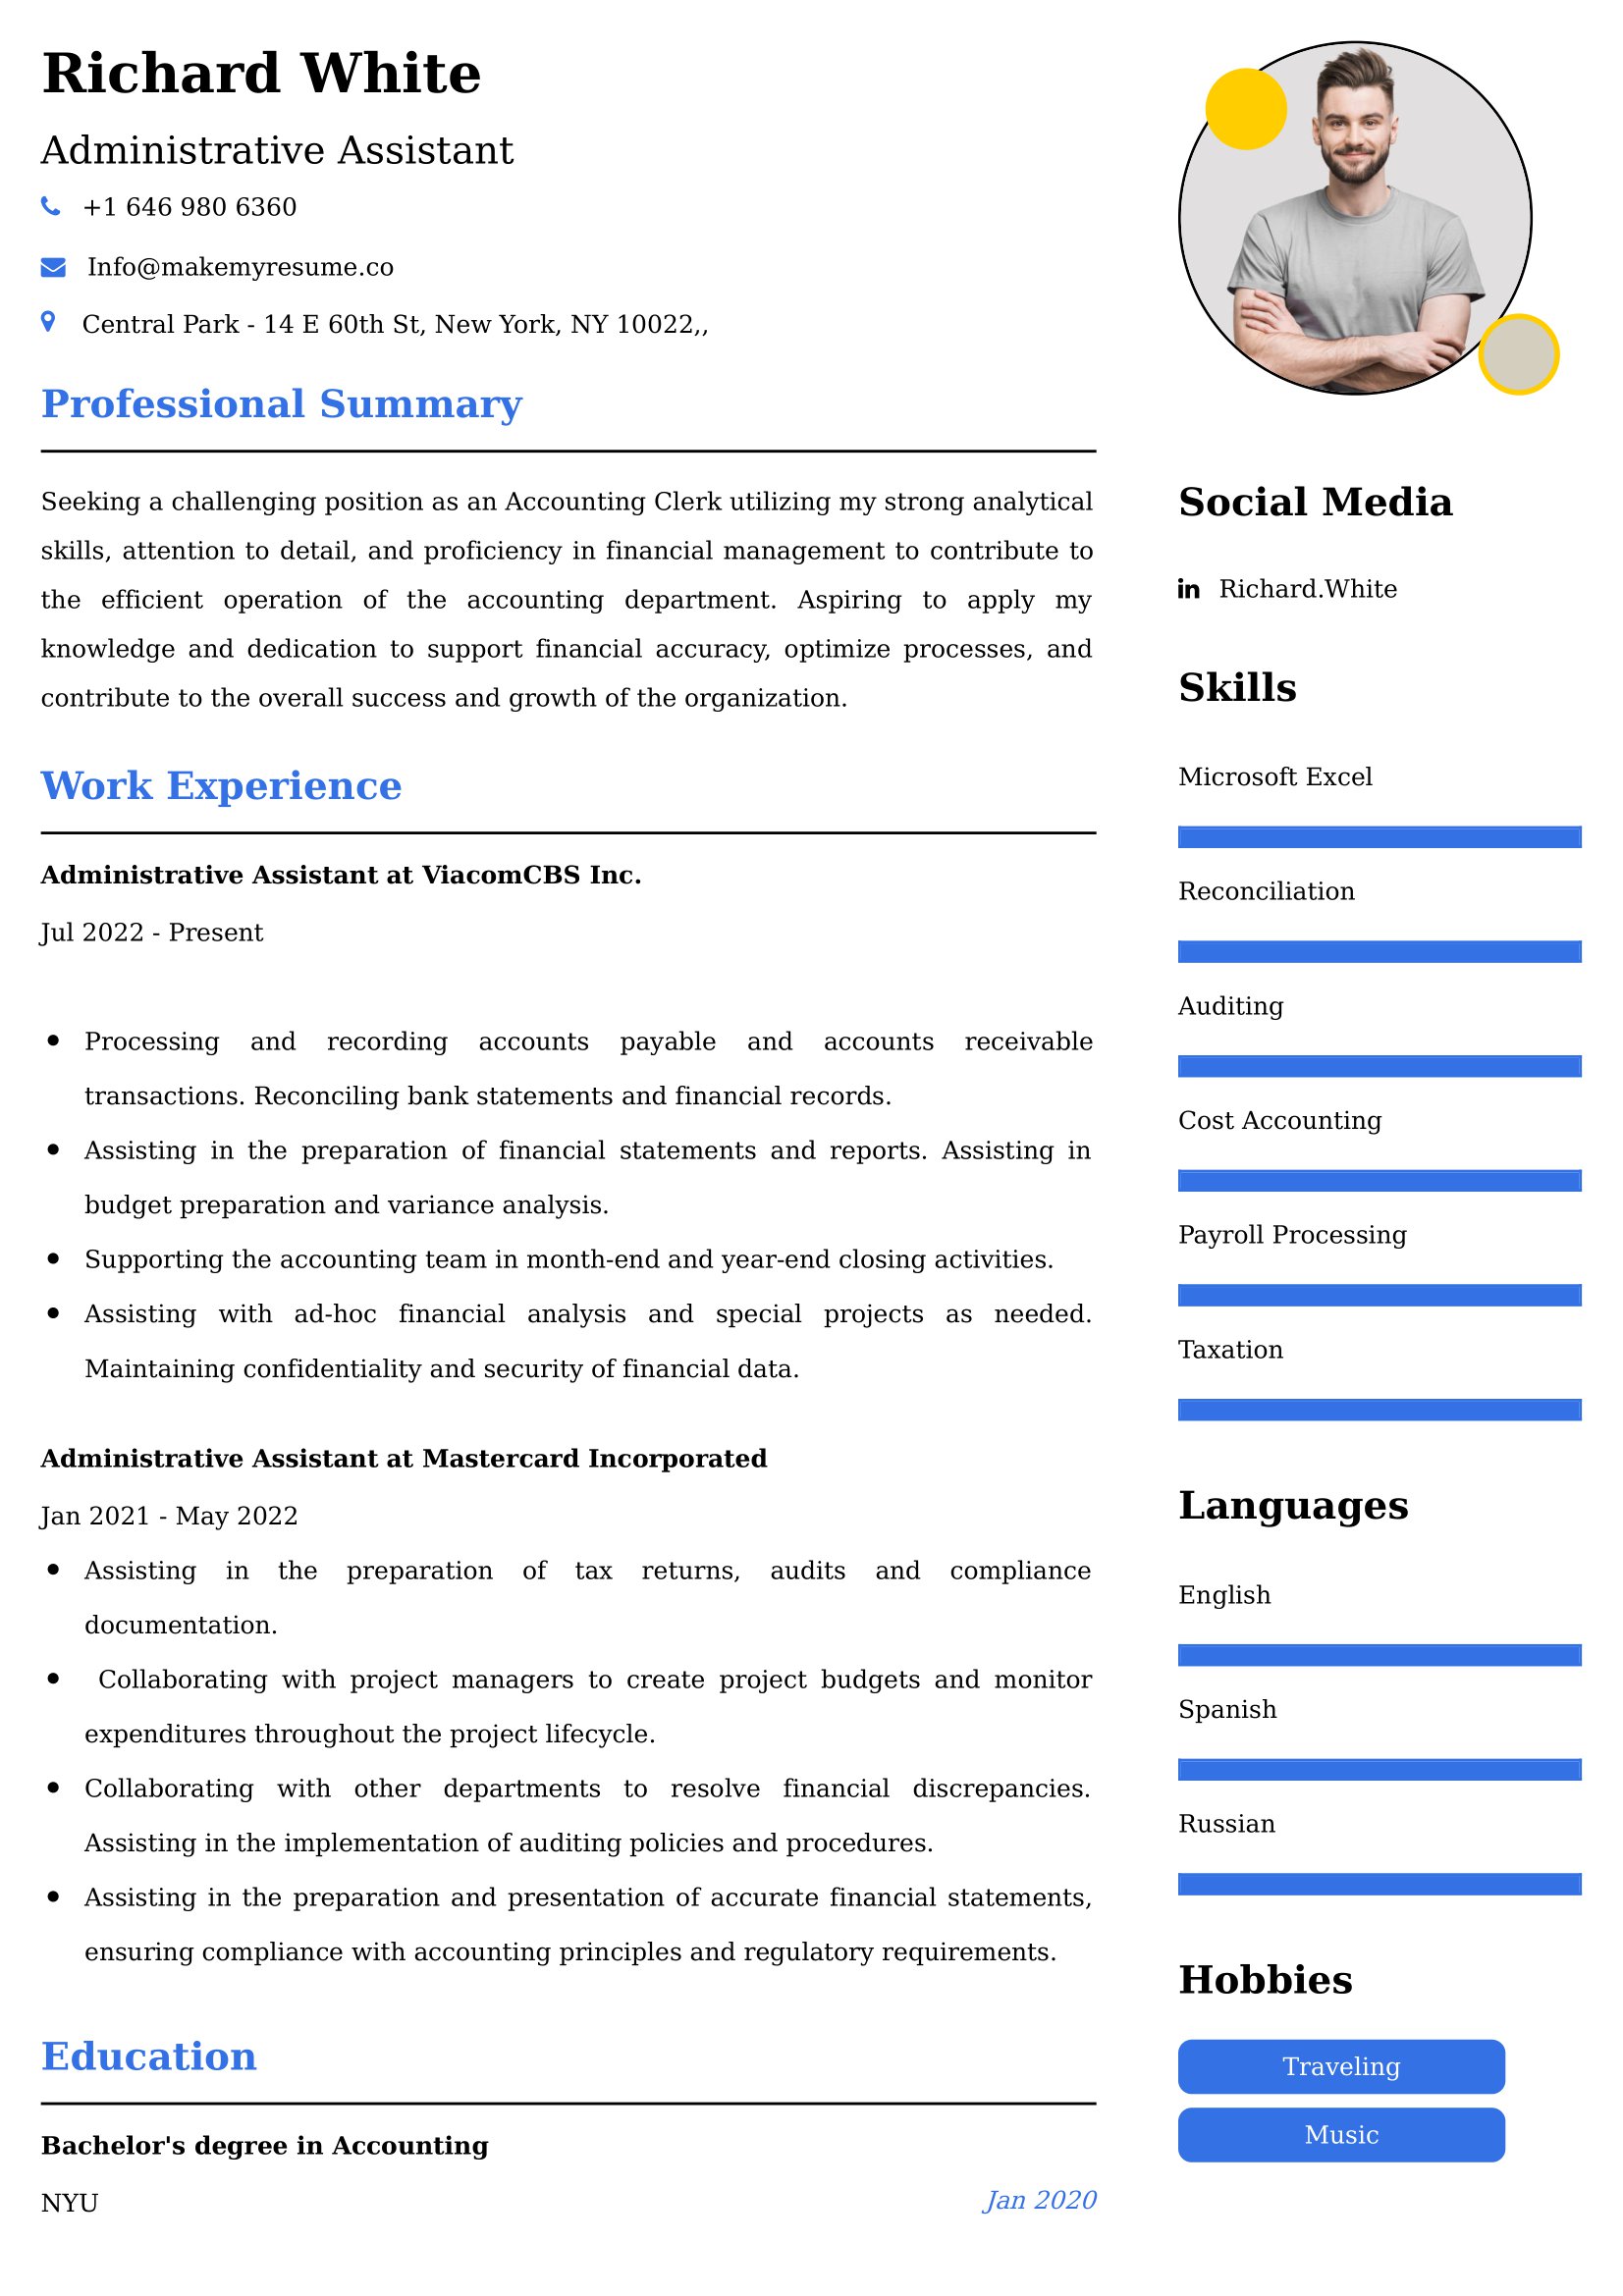 Administrative Assistant CV Examples - US Format